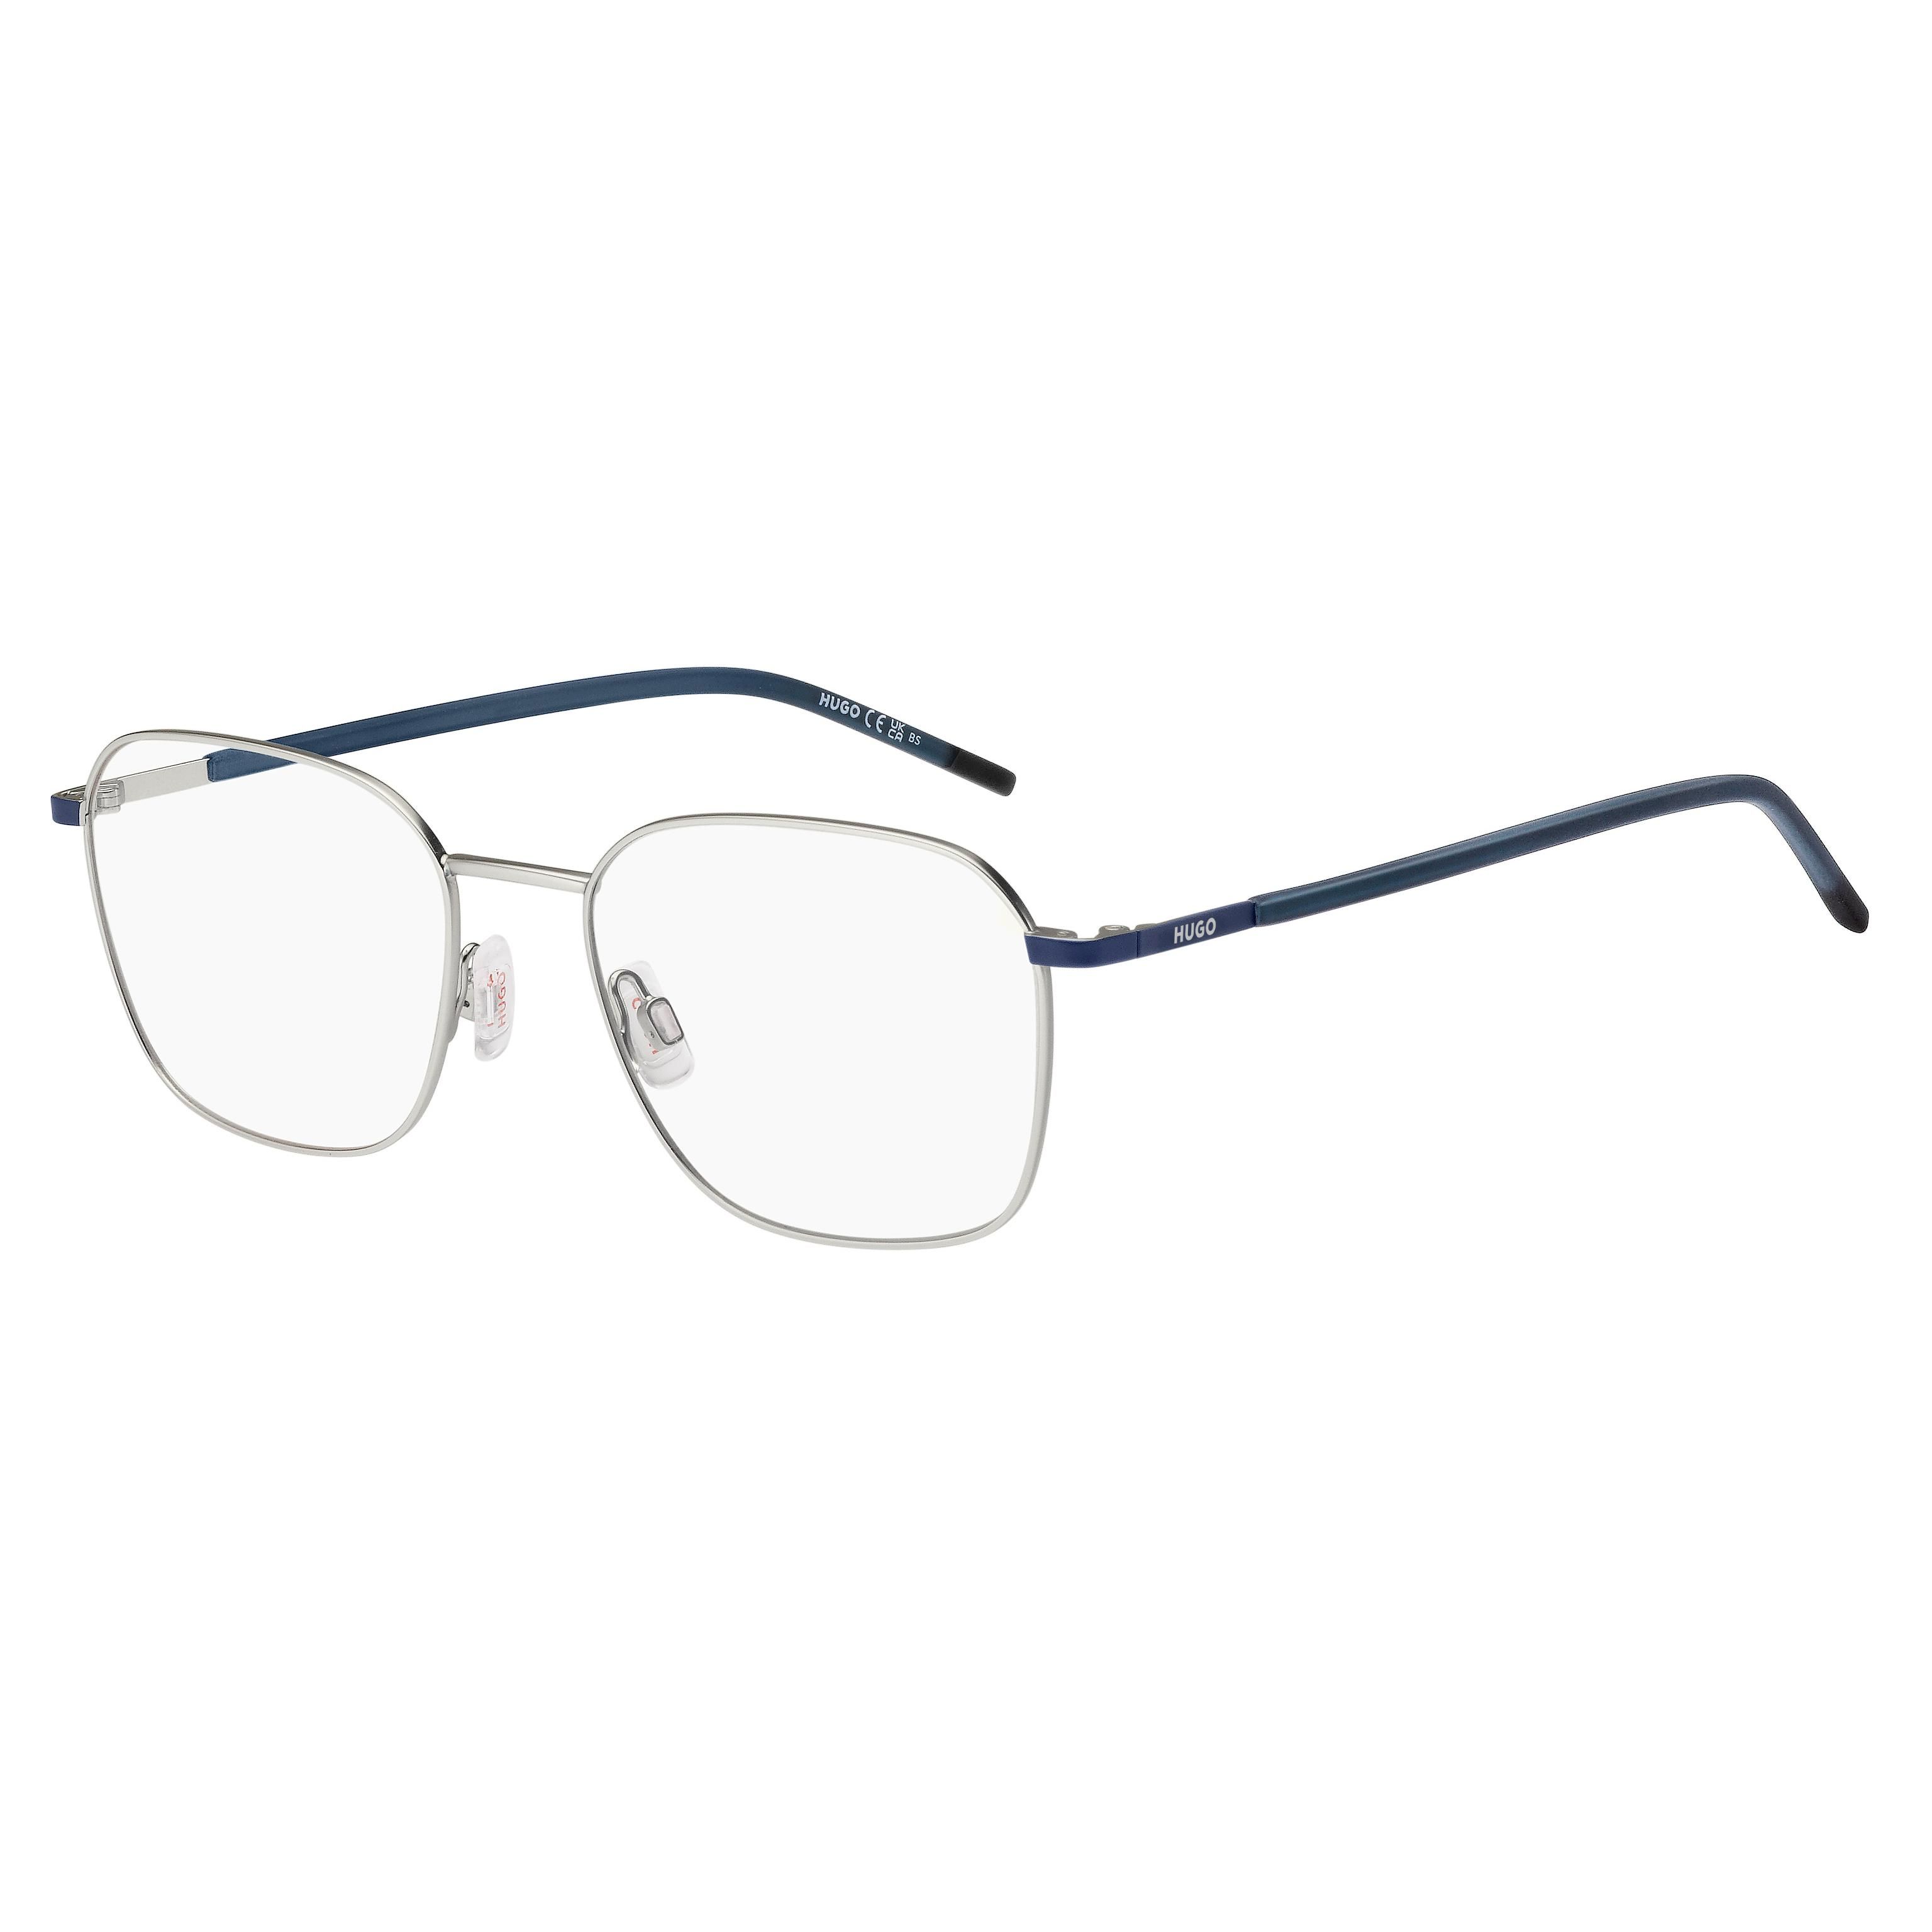 HG 1273 Square Eyeglasses 7XM - size 53